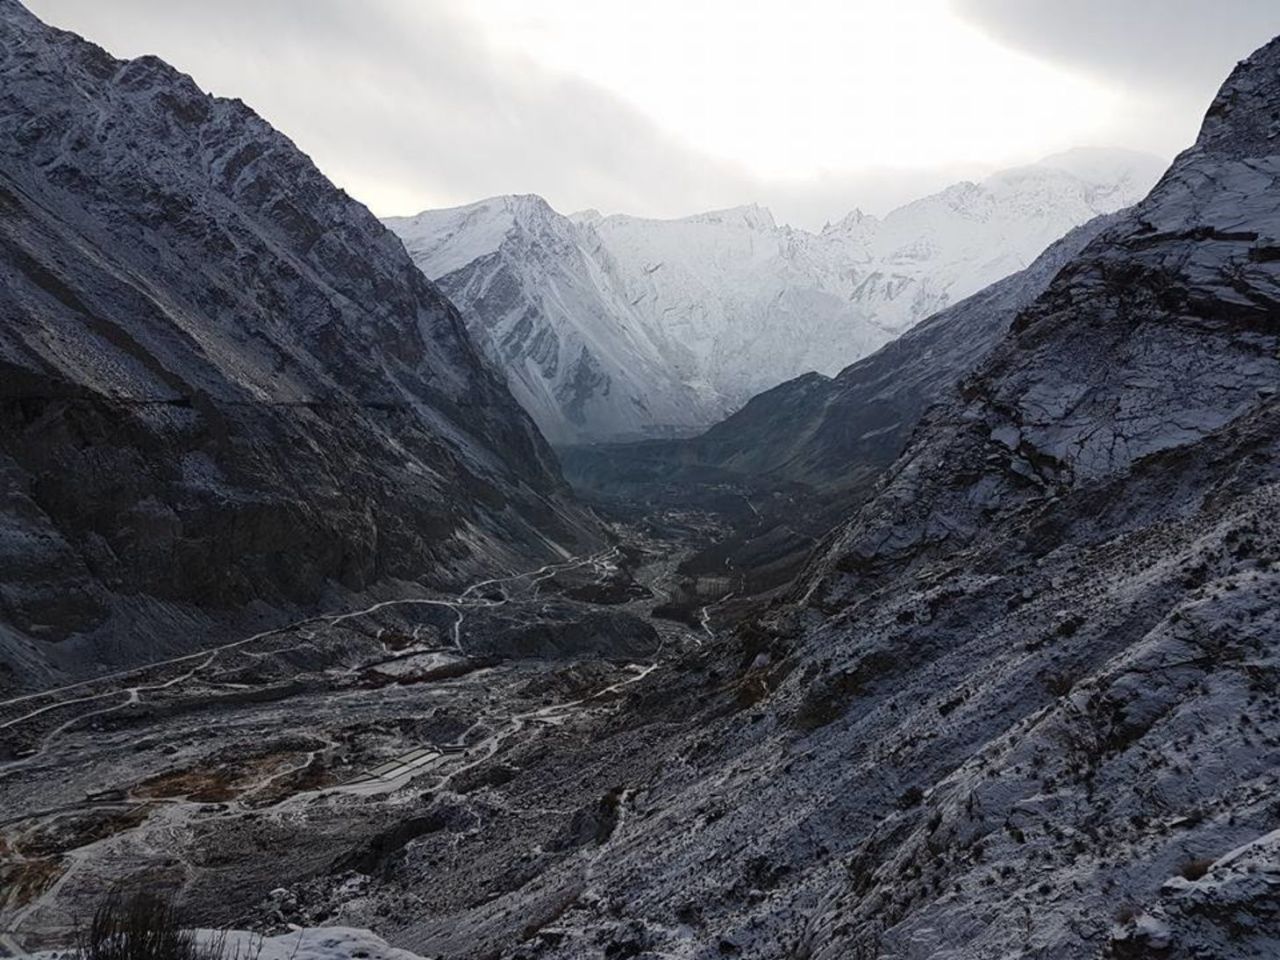 Melting glaciers in Pakistan threaten people